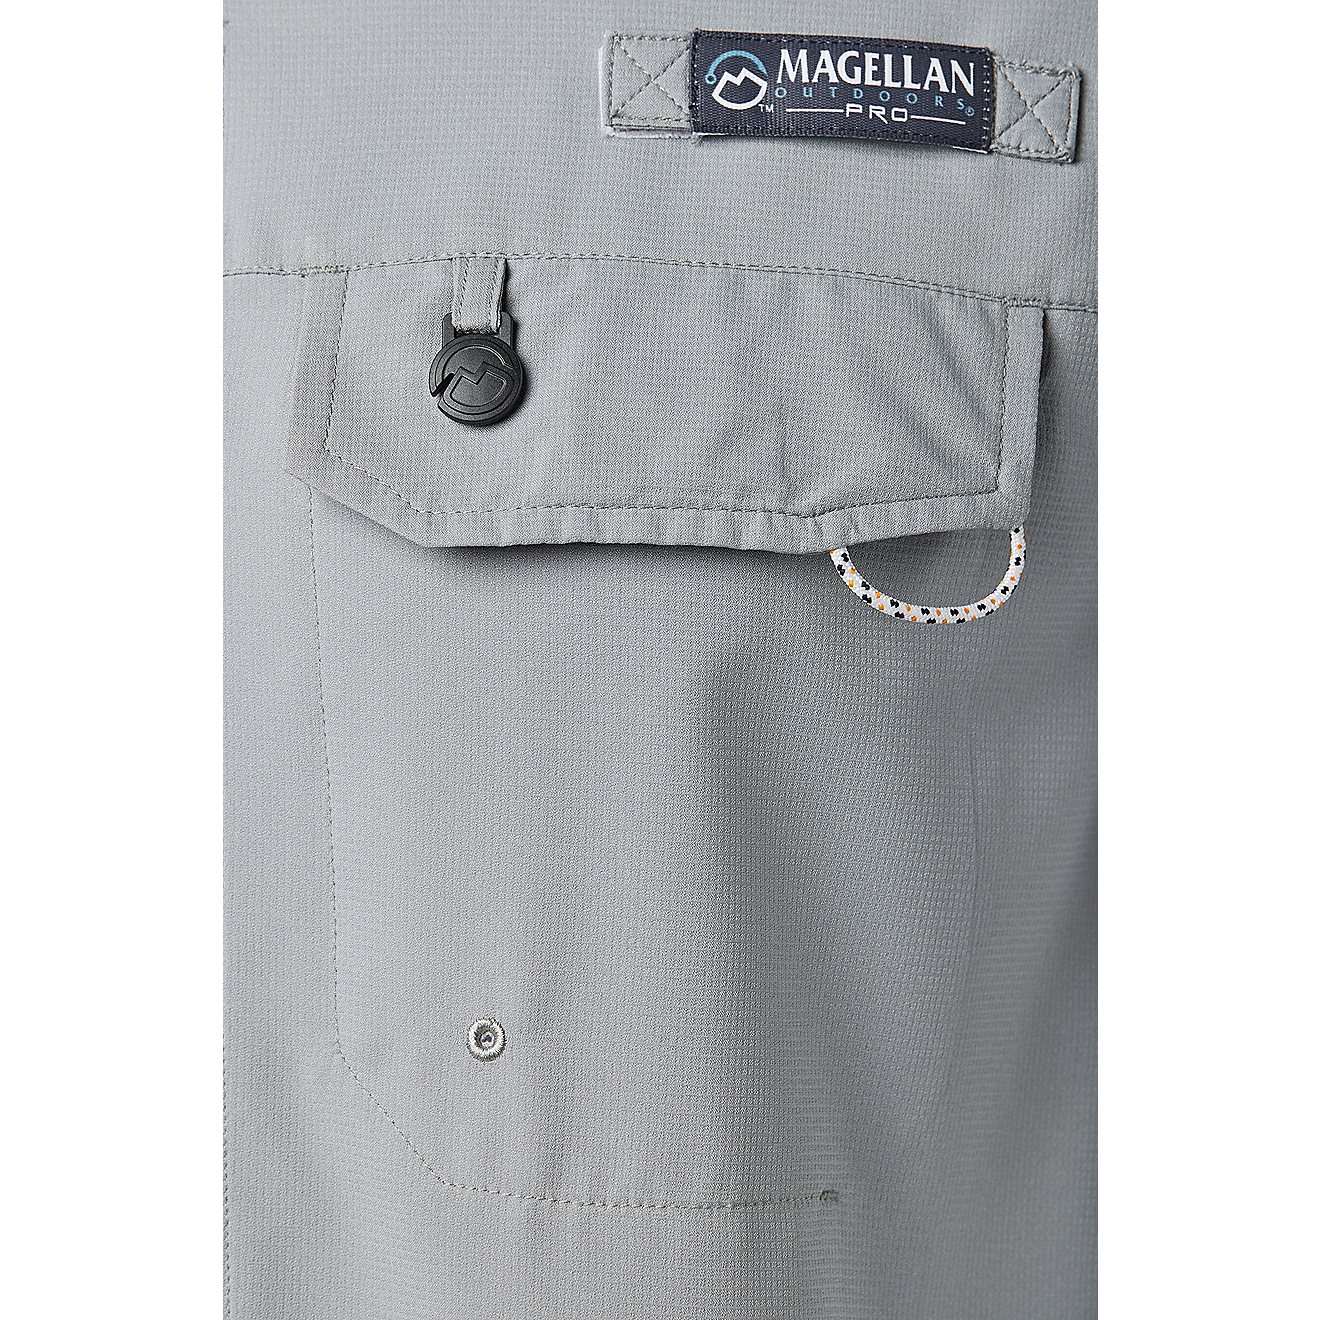 Magellan Outdoors Pro Men's Long Sleeve Shirt                                                                                    - view number 4